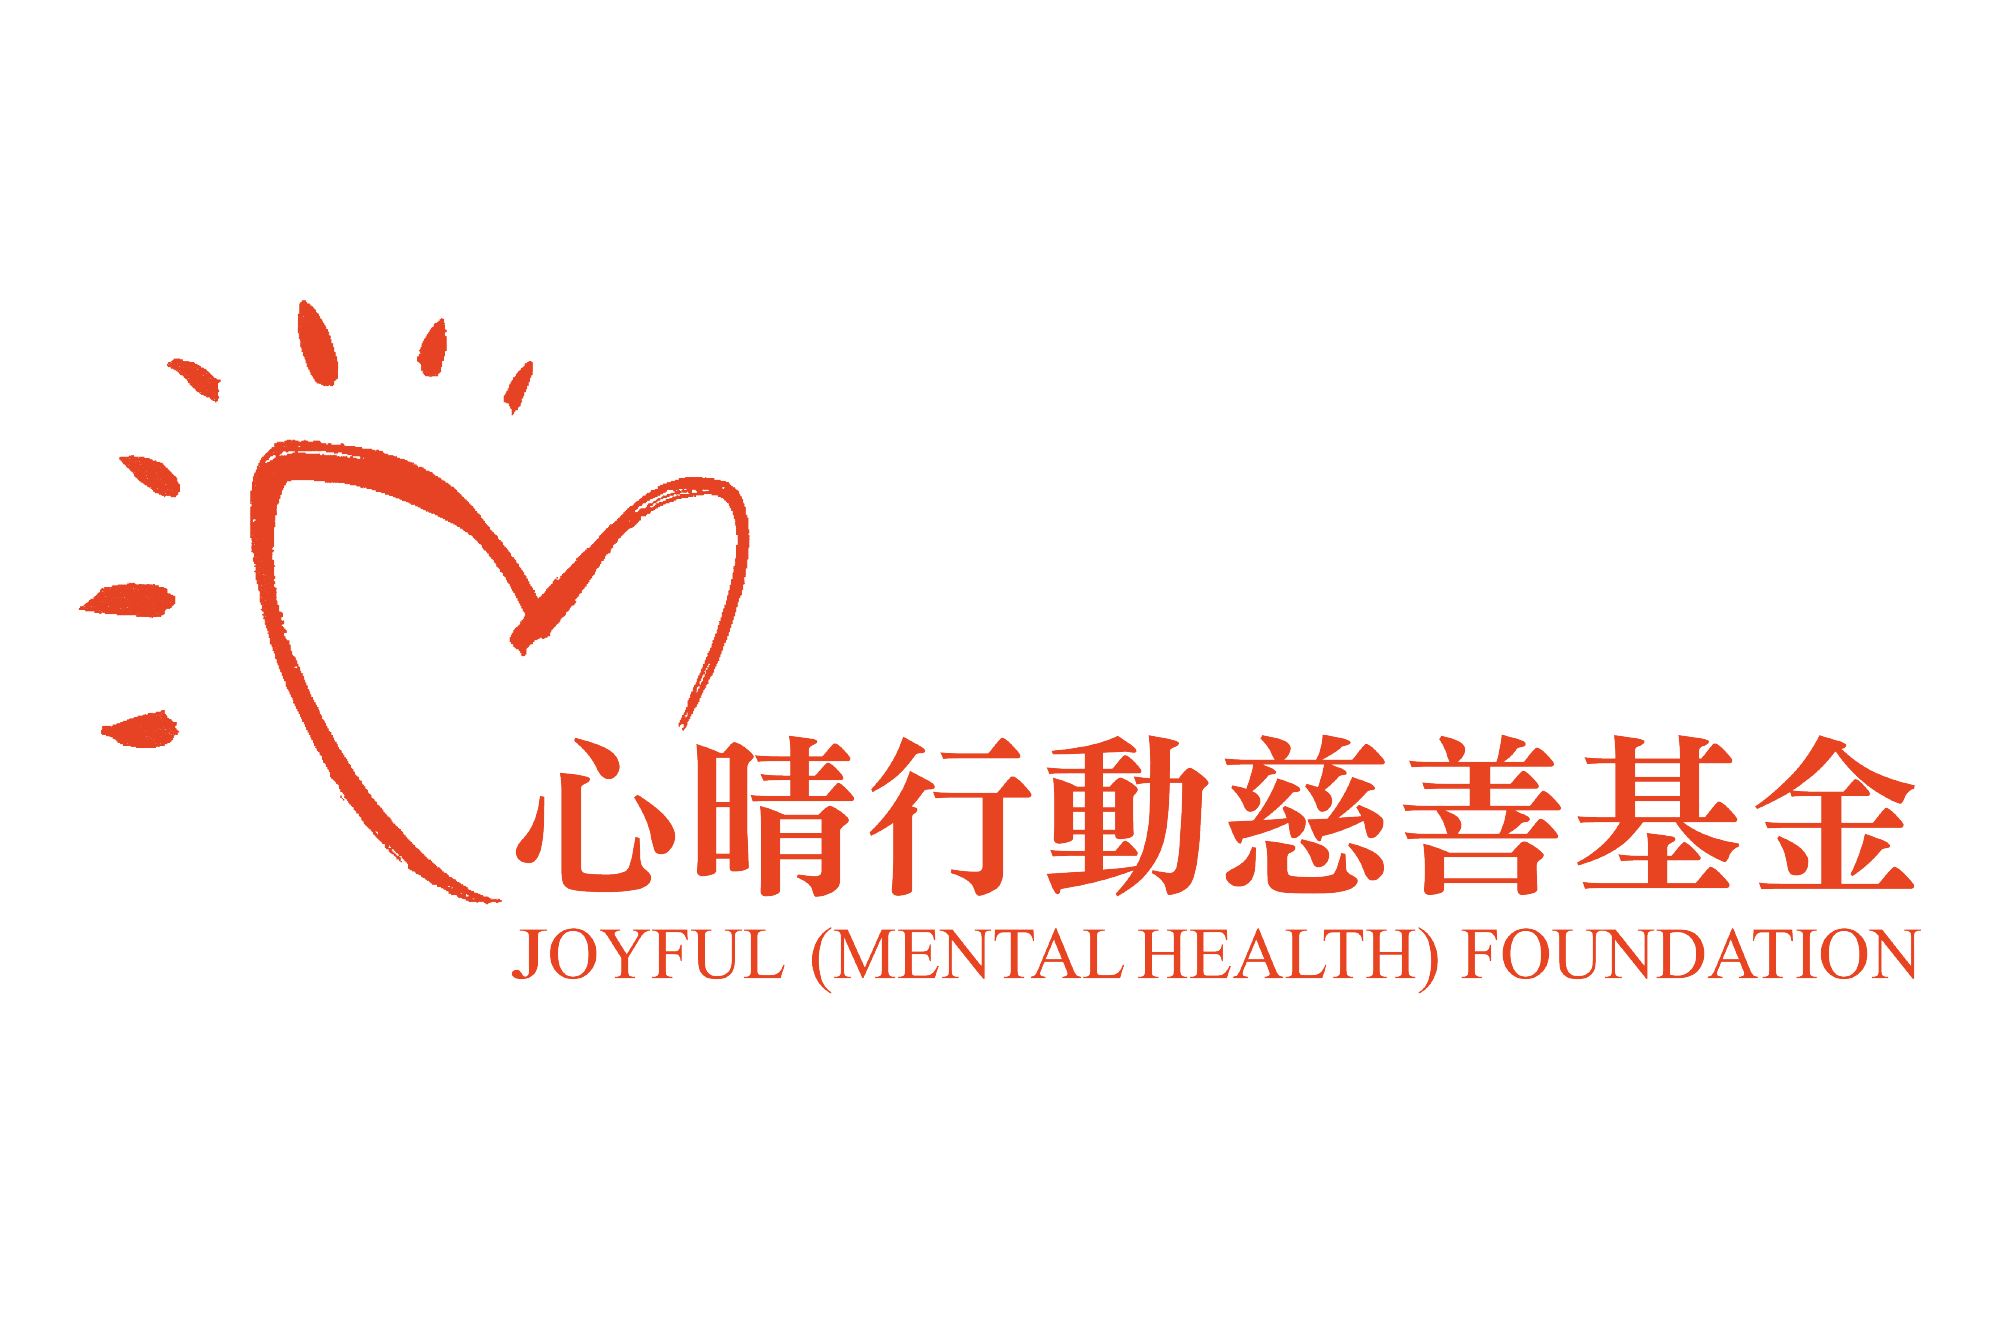 心晴行動慈善基金 JOYFUL (MENTAL HEALTH) FOUNDATION 